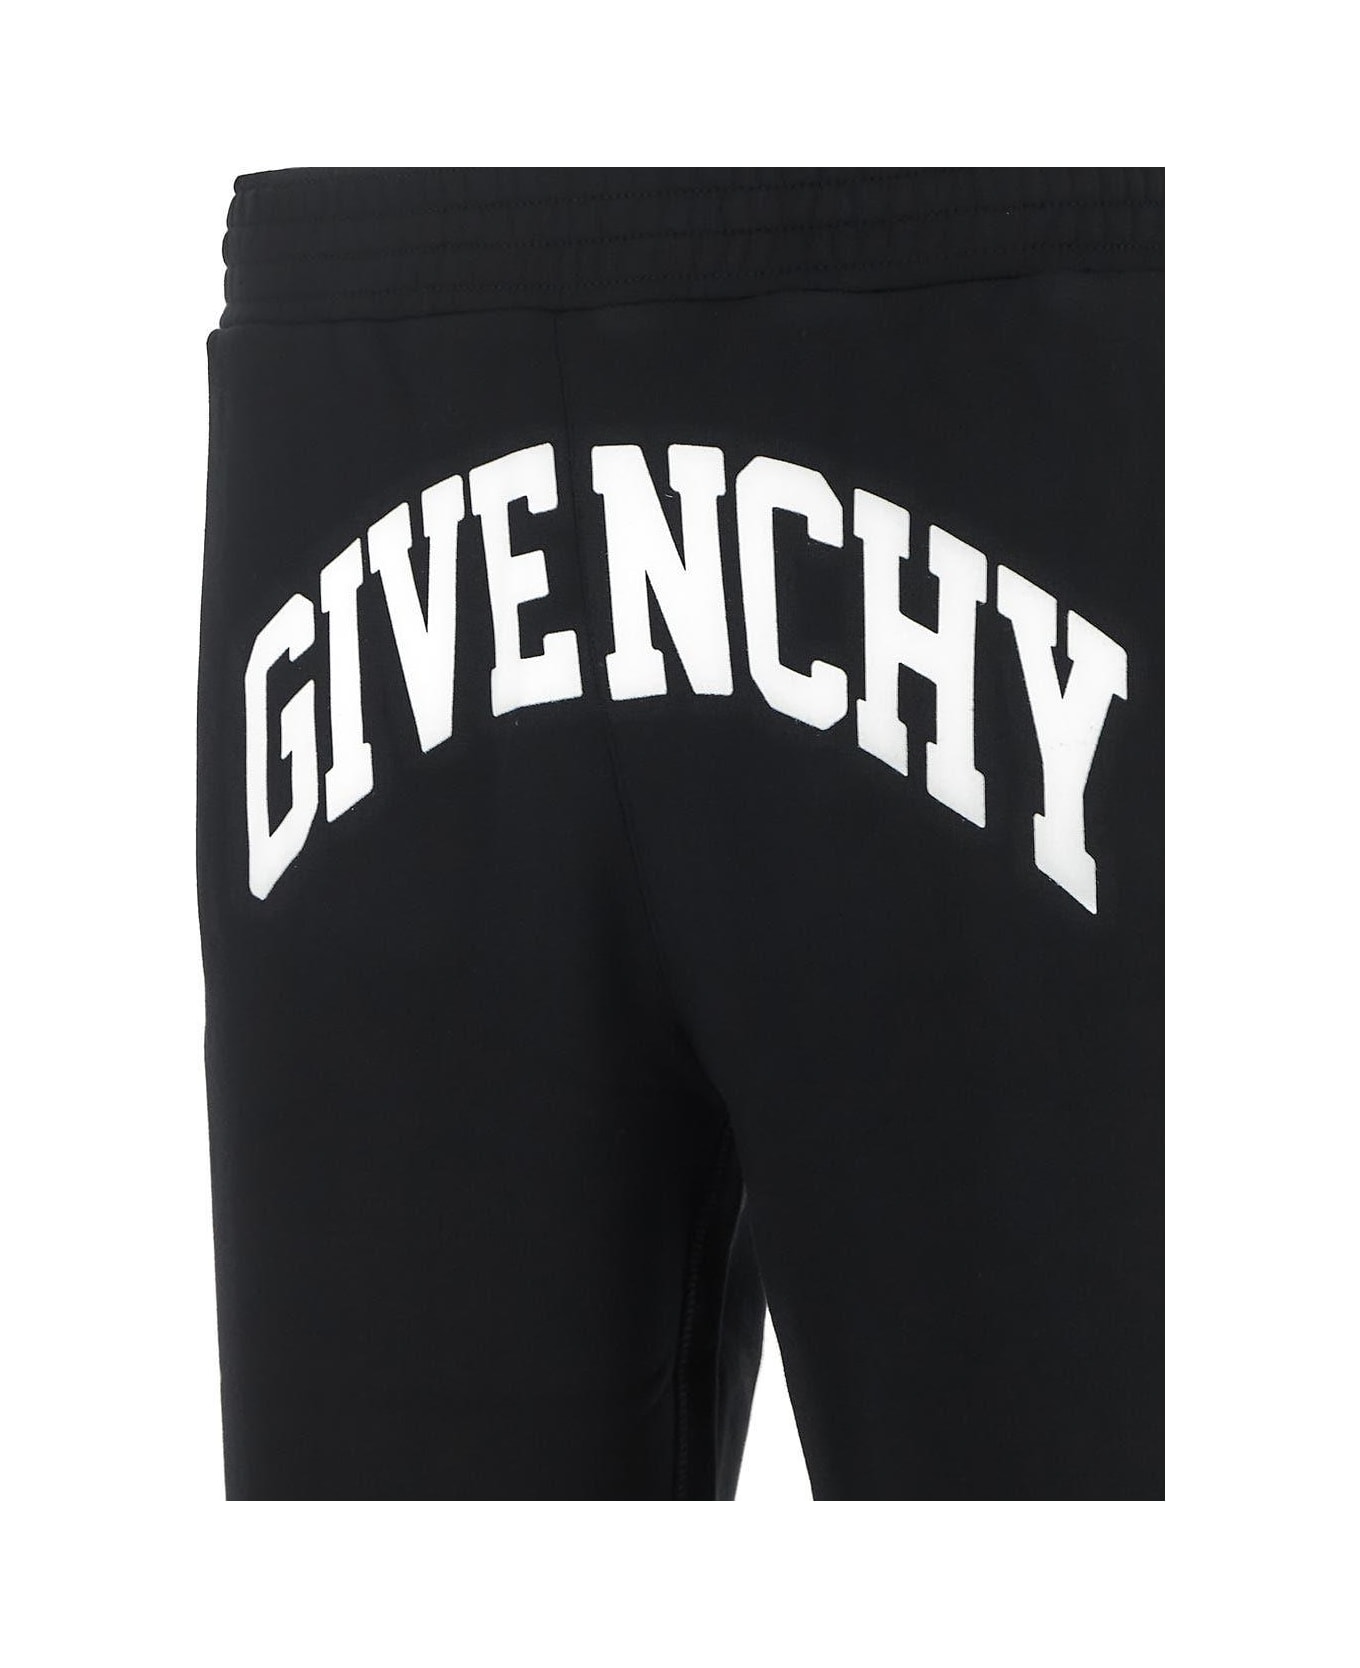 Givenchy Black Sweatpants - Black スウェットパンツ